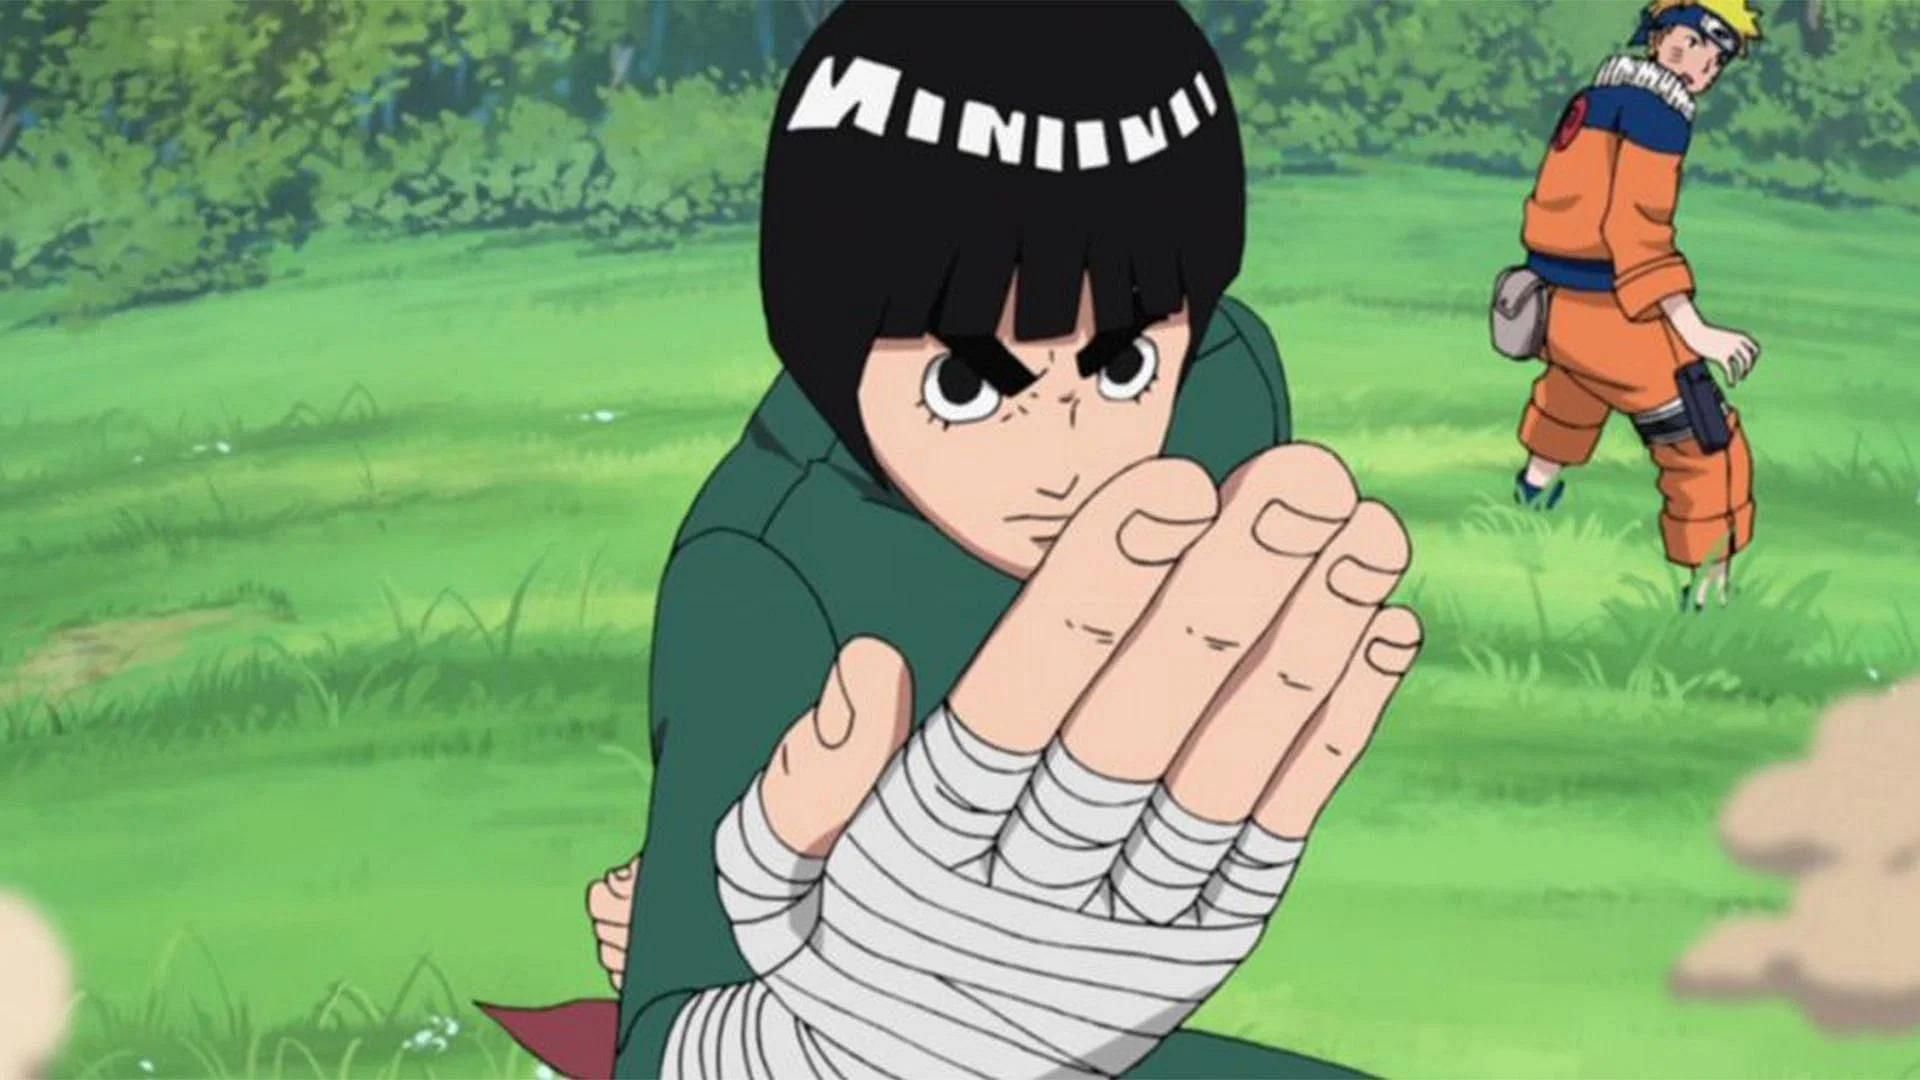 Rock Lee protects Naruto from Kimimaro (Image via Studio Pierrot)